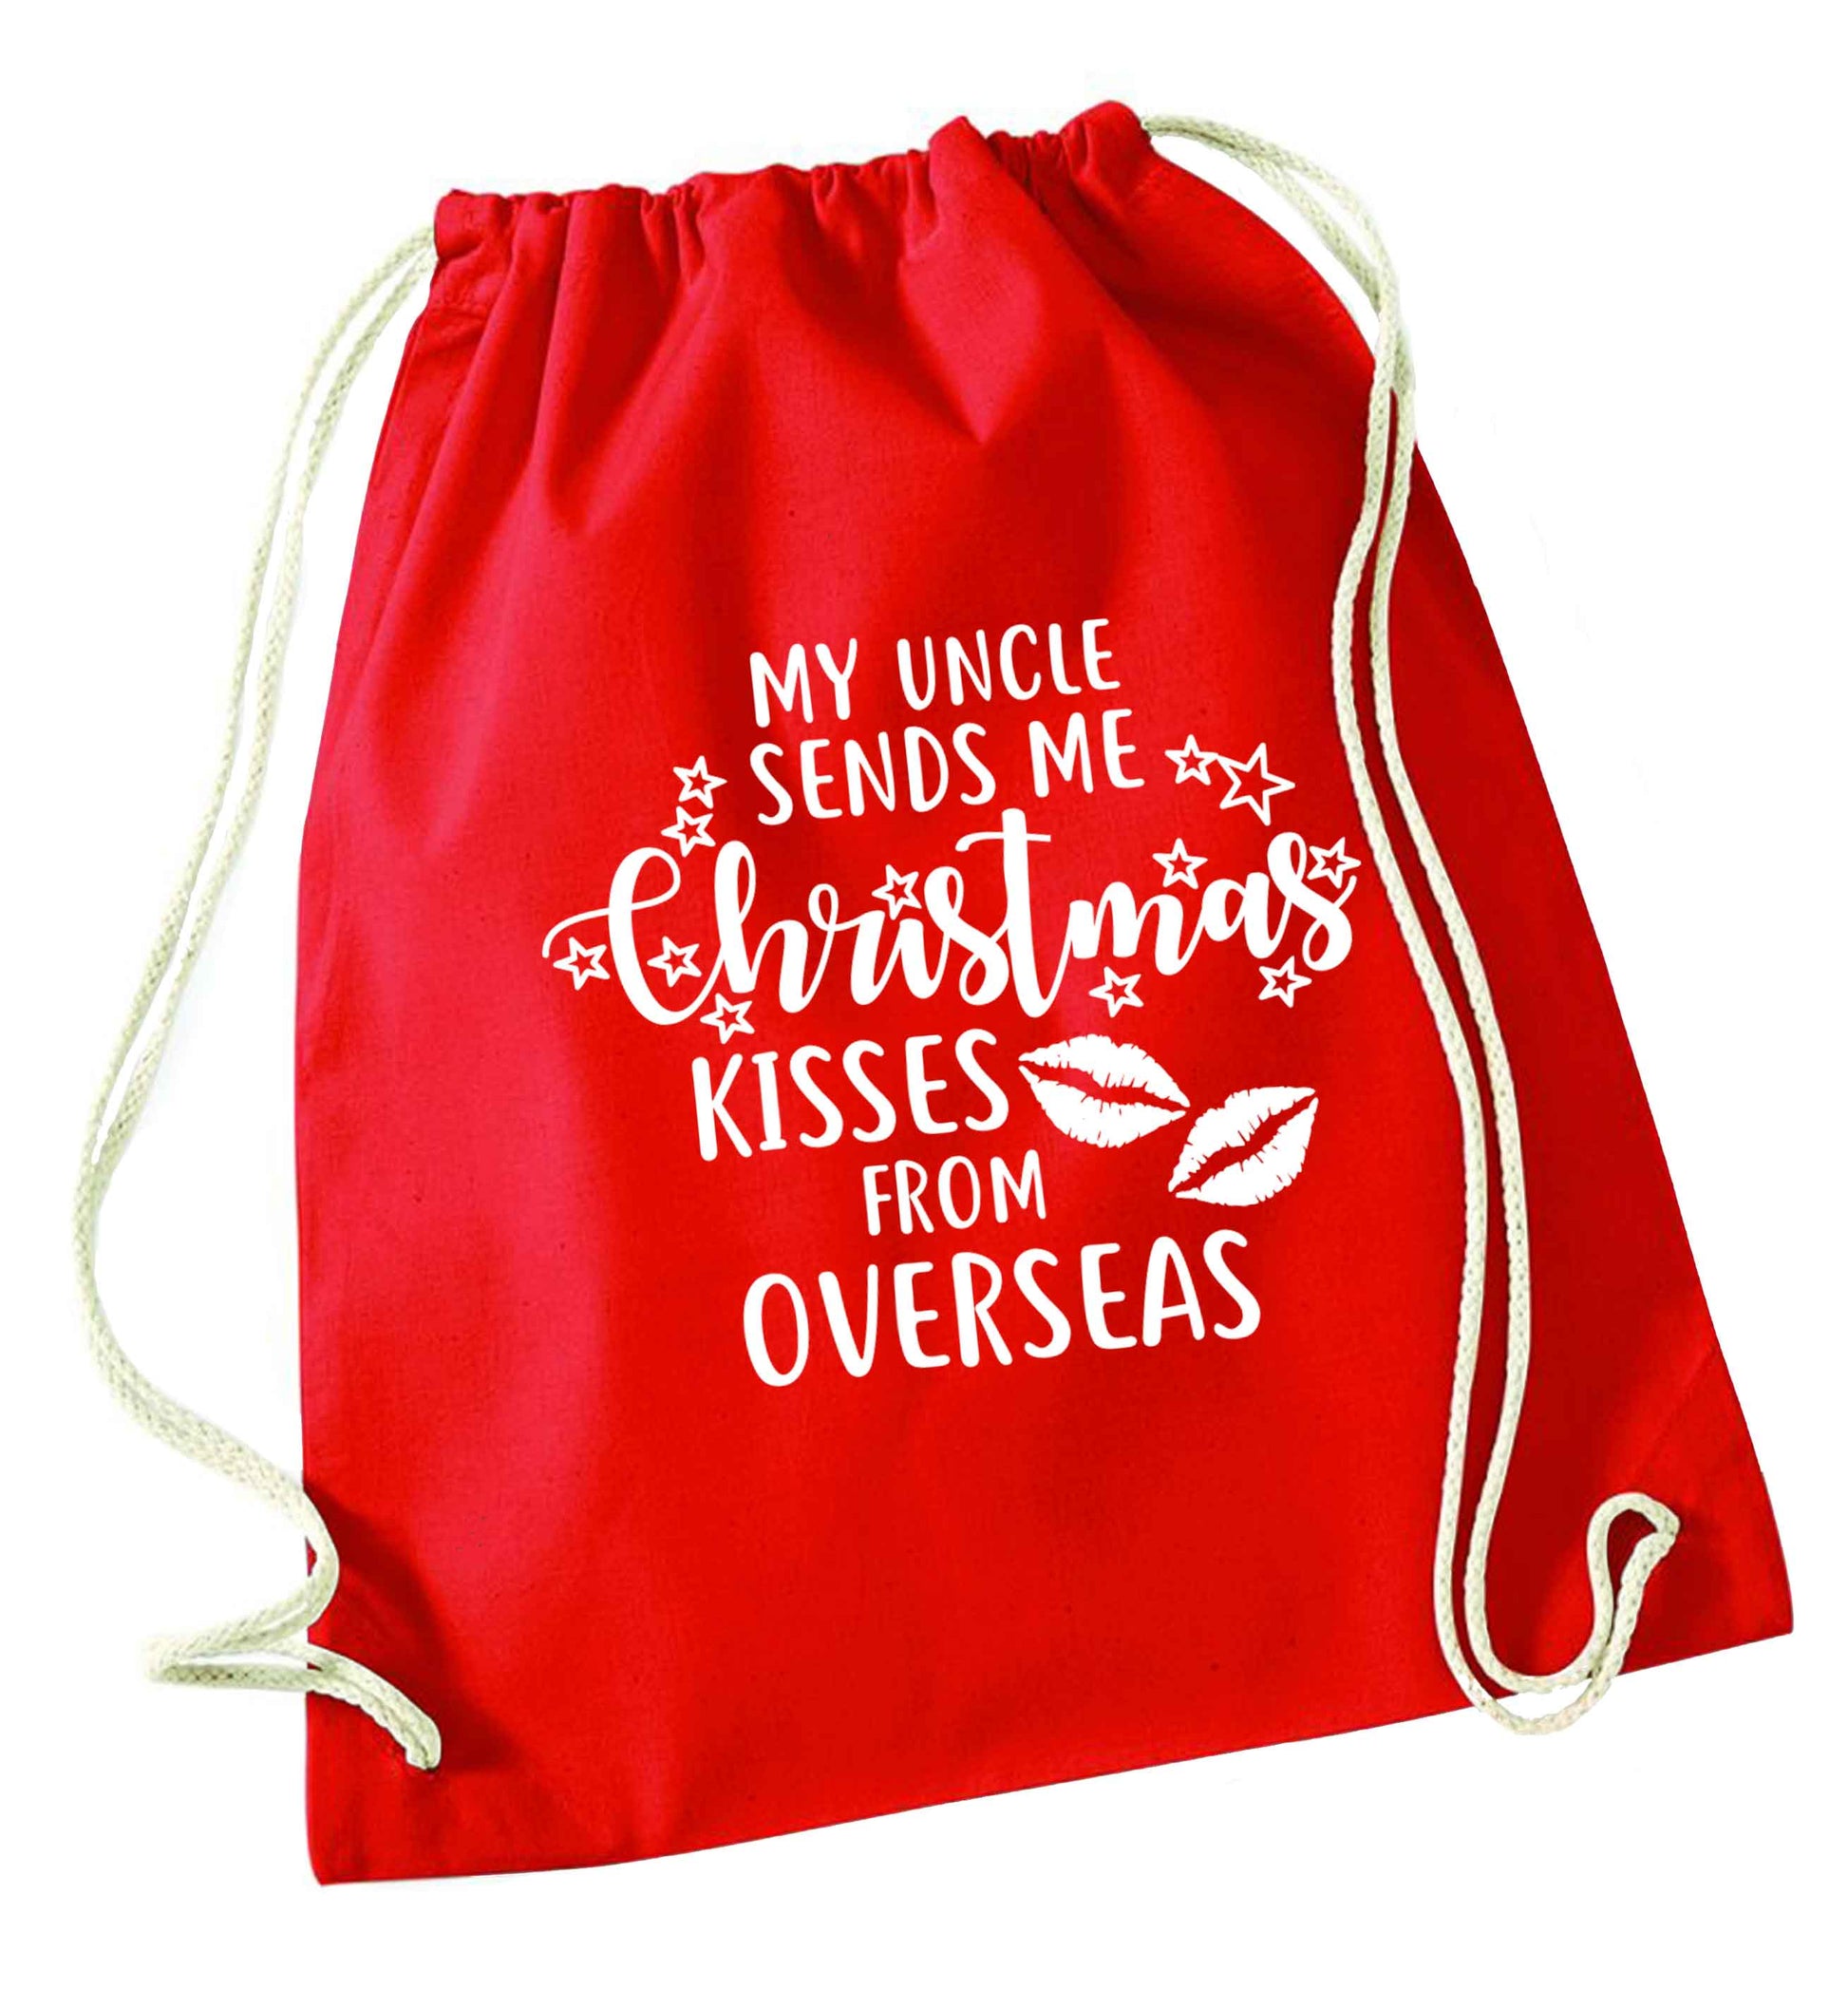 Brother Christmas Kisses Overseas red drawstring bag 